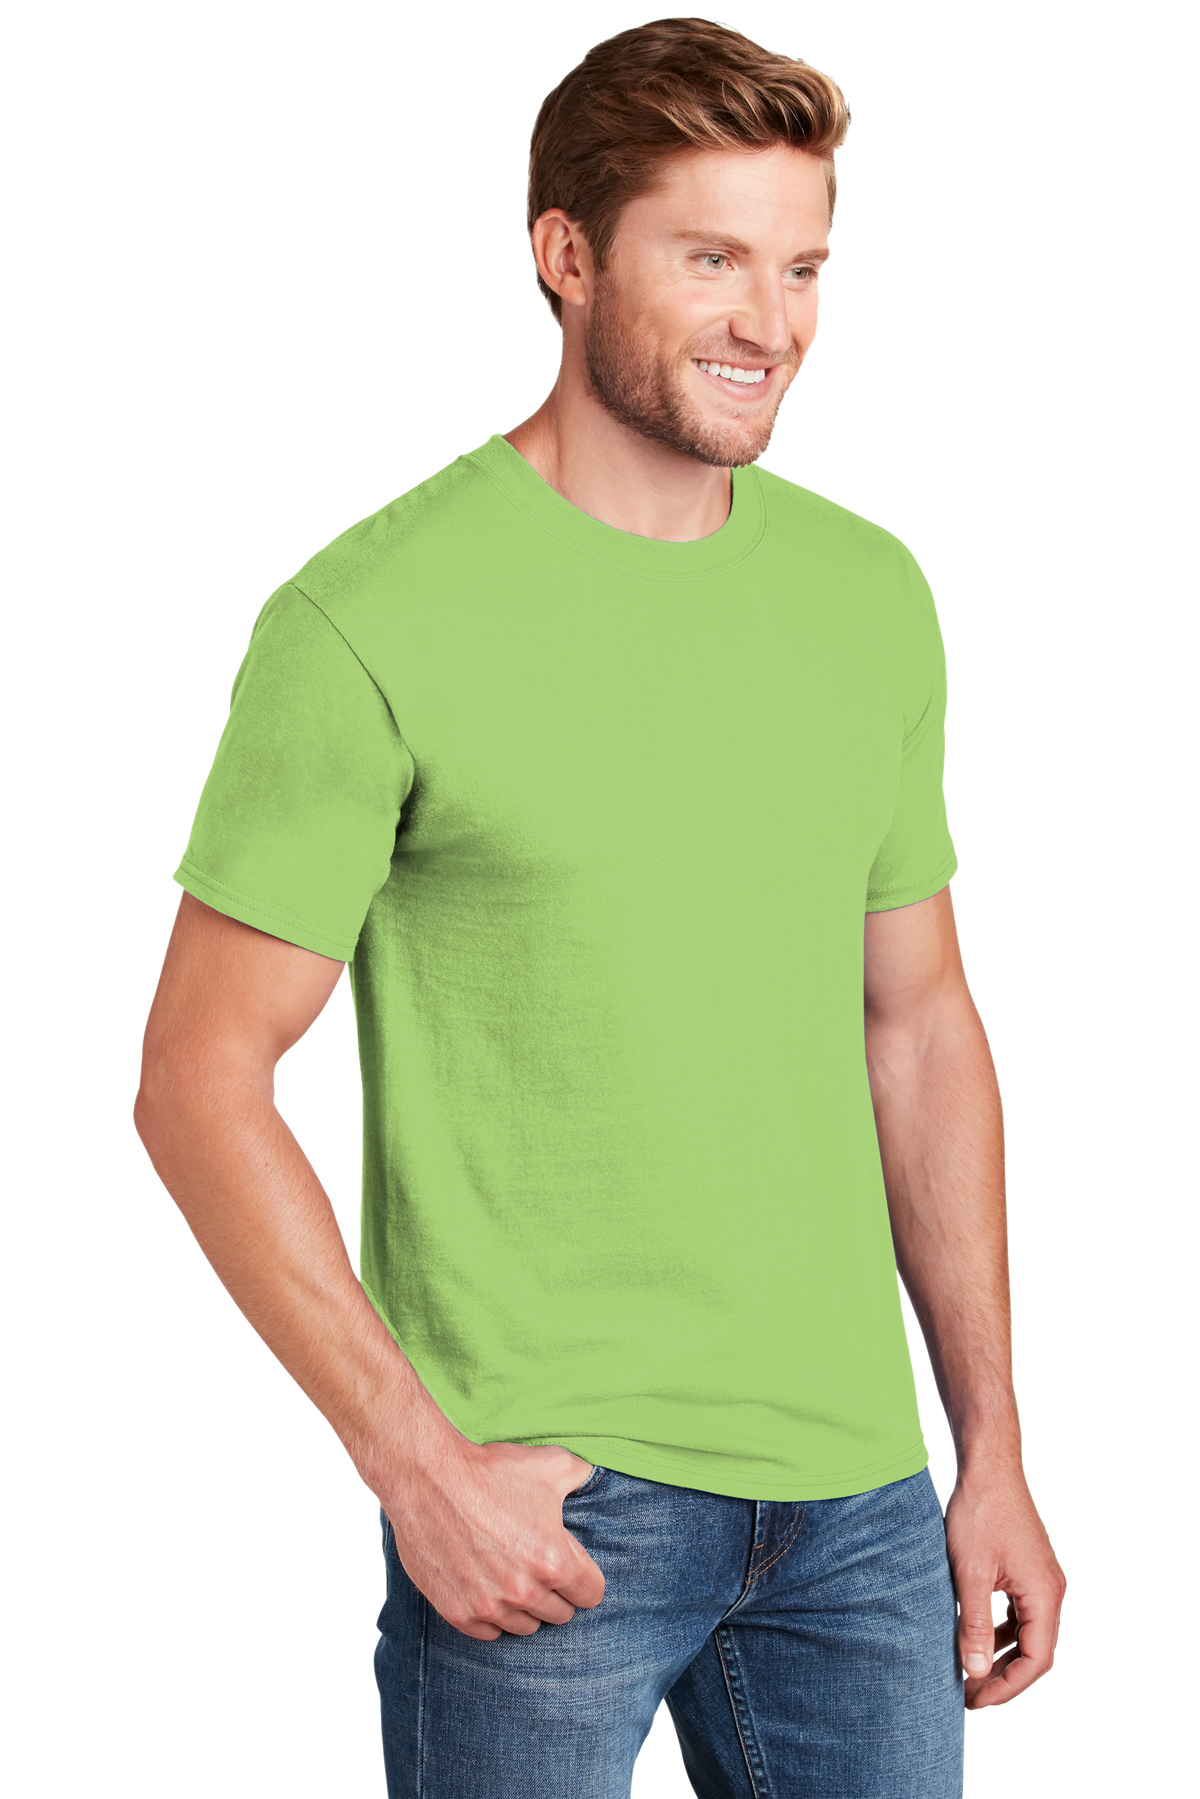 Cotton T-Shirt 5180 2XL 3XL 4XL 5XL 6XL 30 colors and more Hanes Beefy-T 6.1 oz